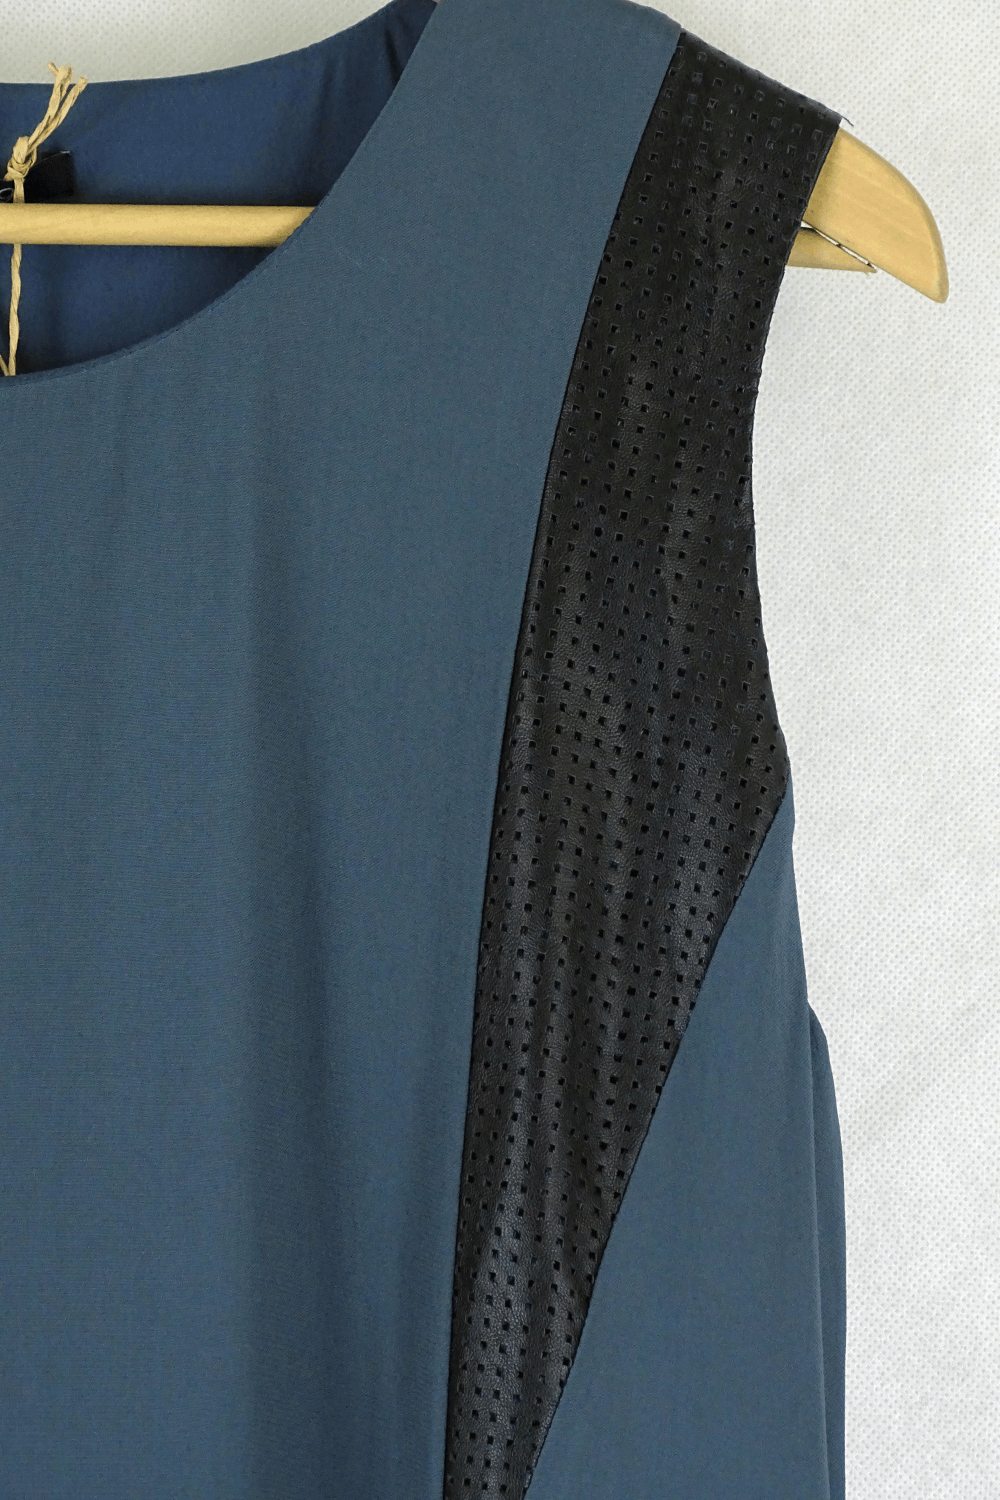 Ping Pong Grey Sleeveless Dress With Black Trim 14